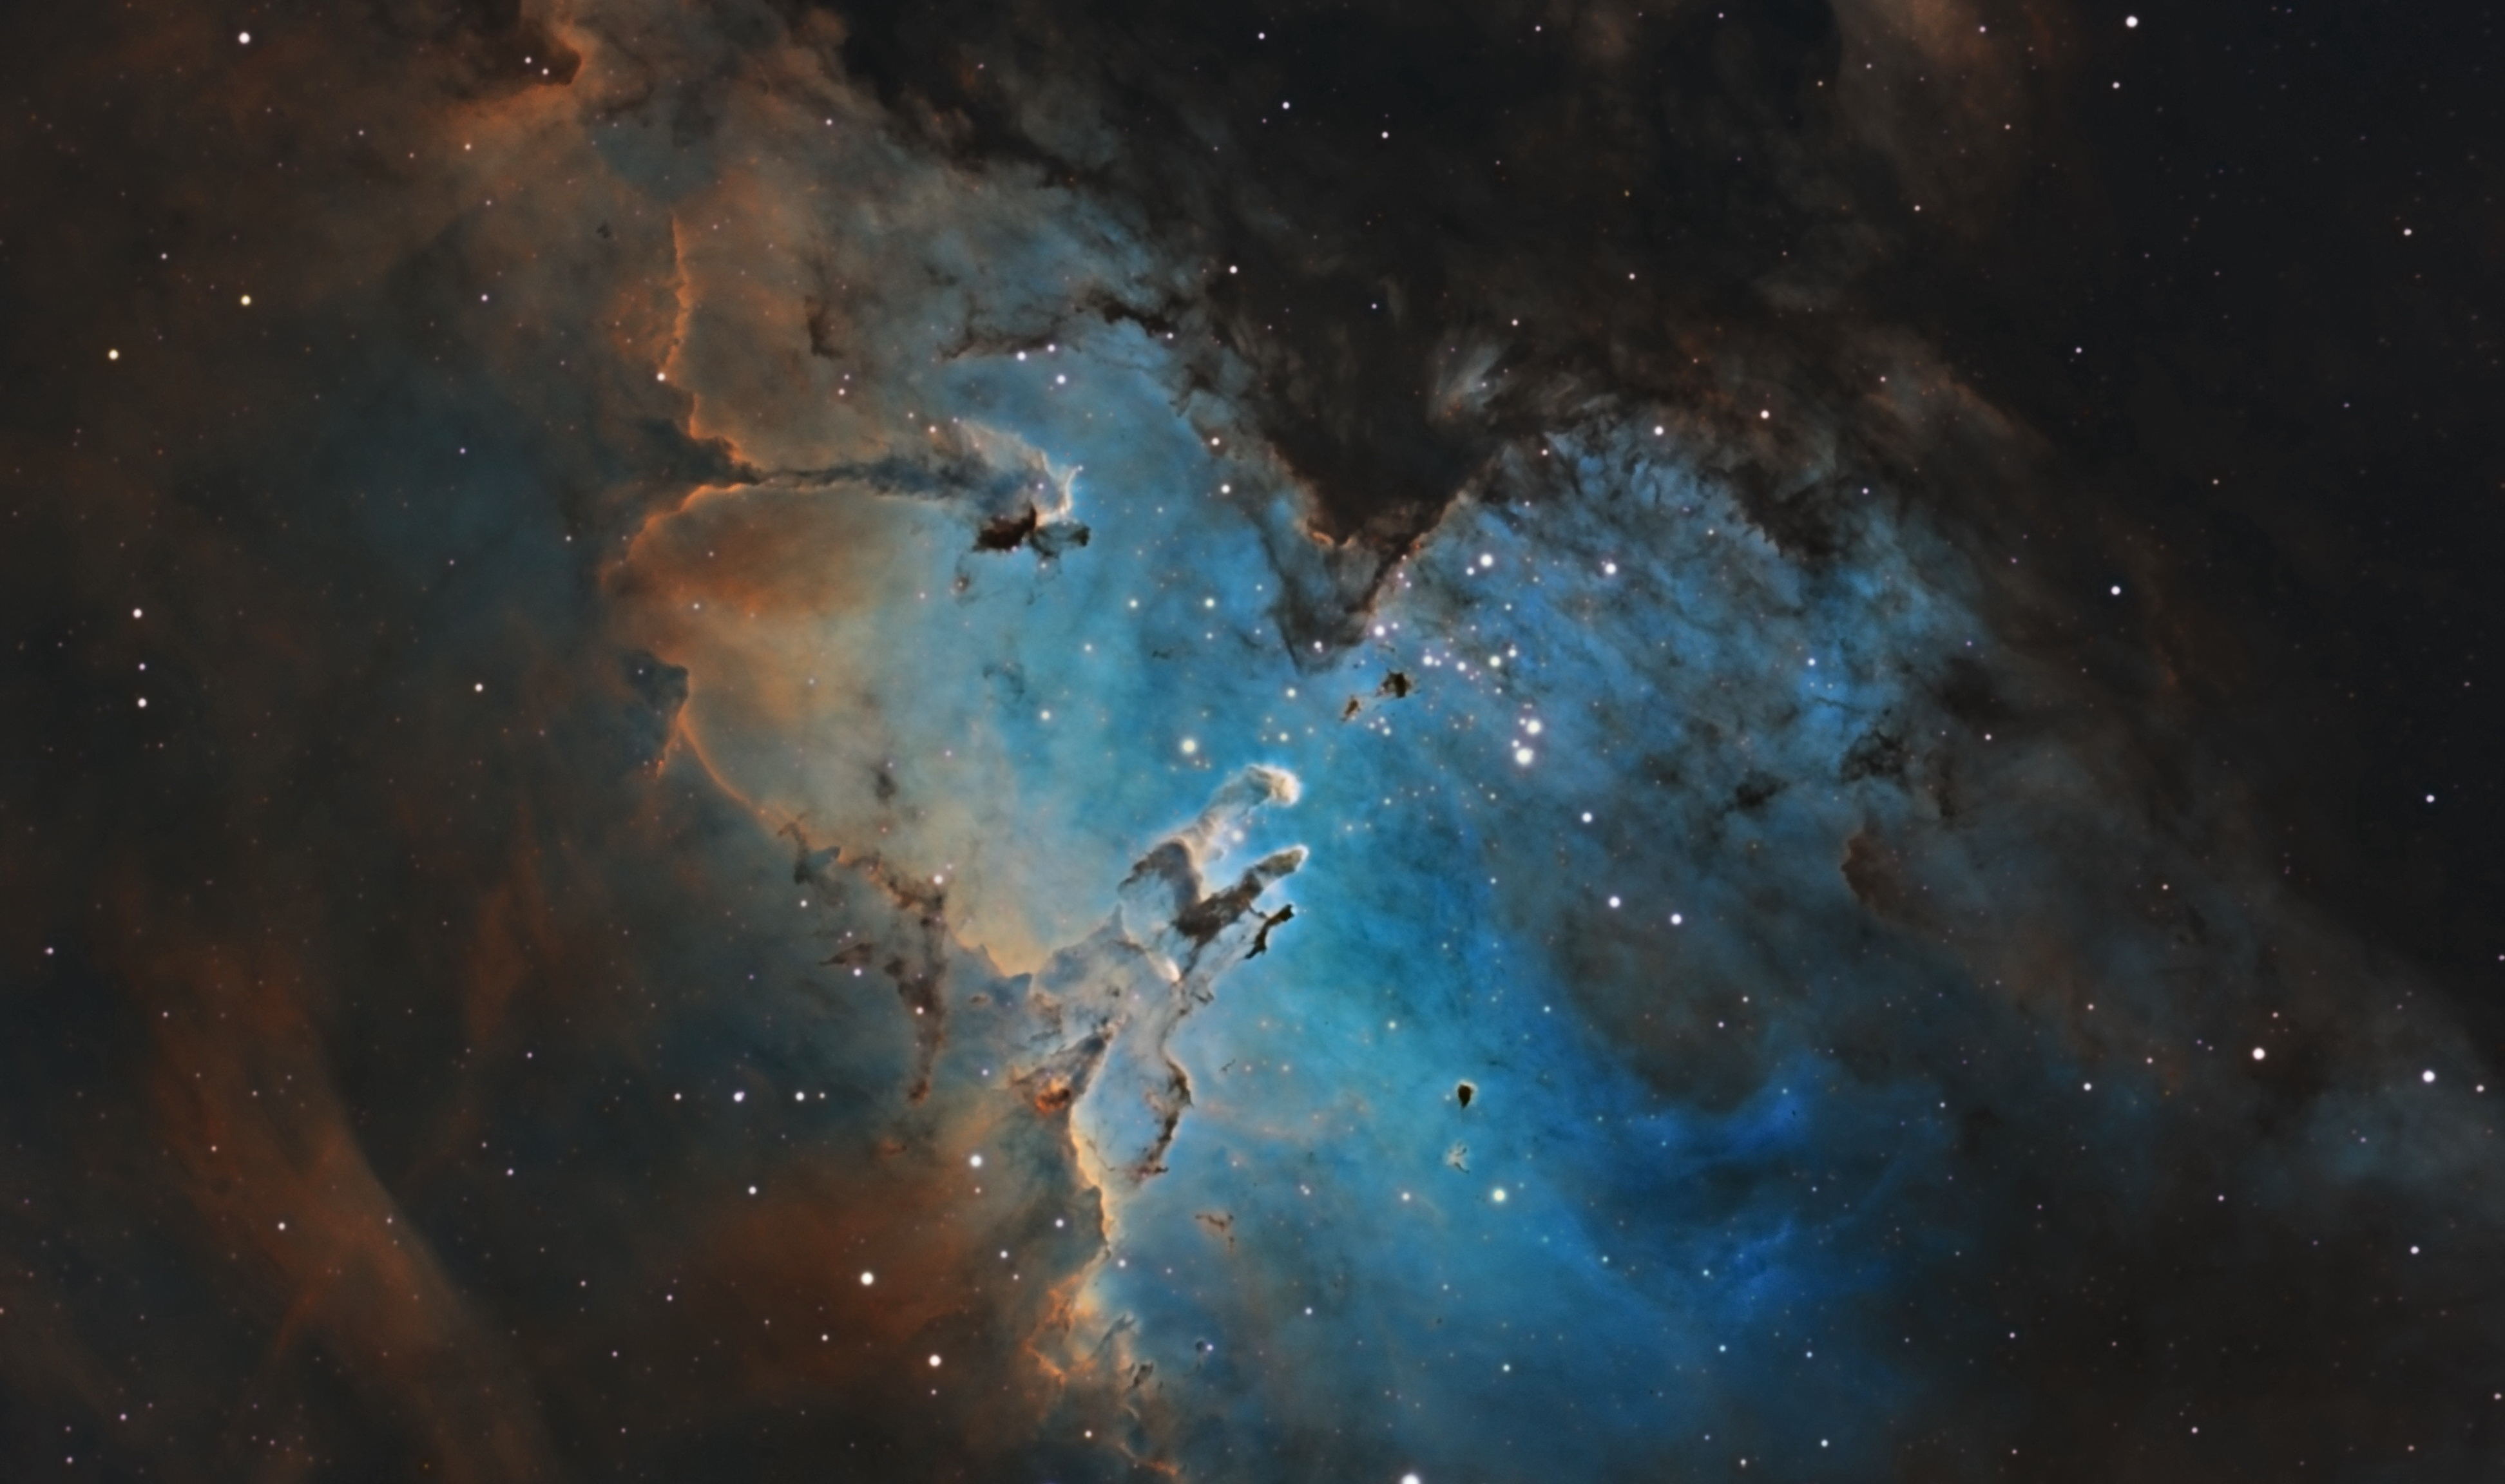 Eagle Nebula in SHO (The Pillars of Creation)